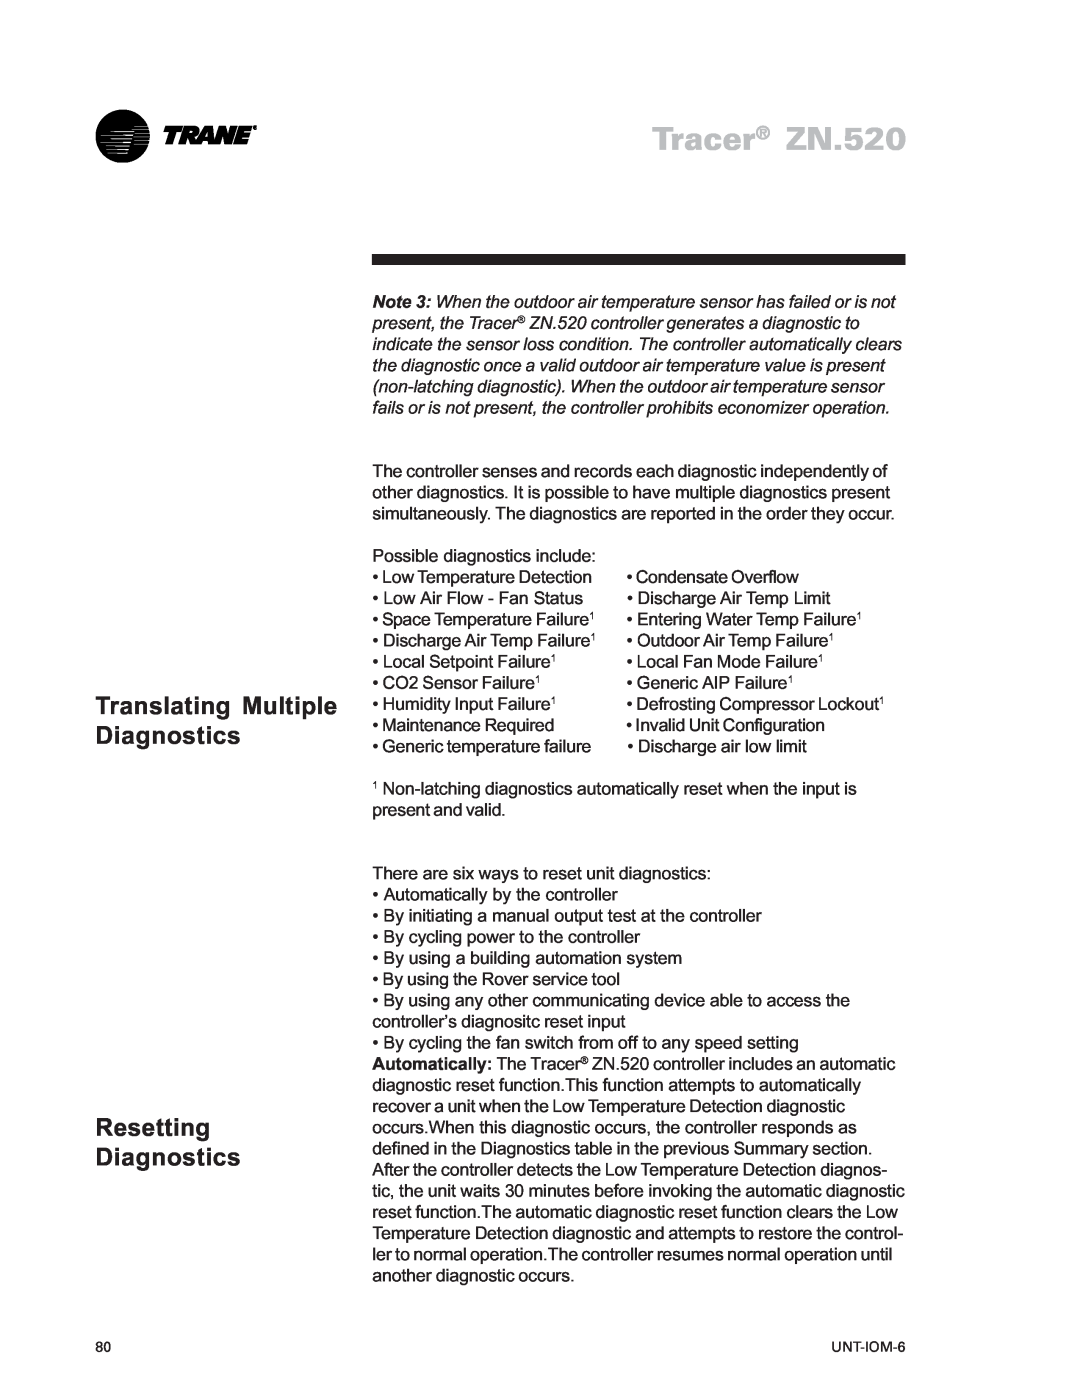 Trane LO manual Translating Multiple Diagnostics, Tracer ZN.520, Resetting Diagnostics 